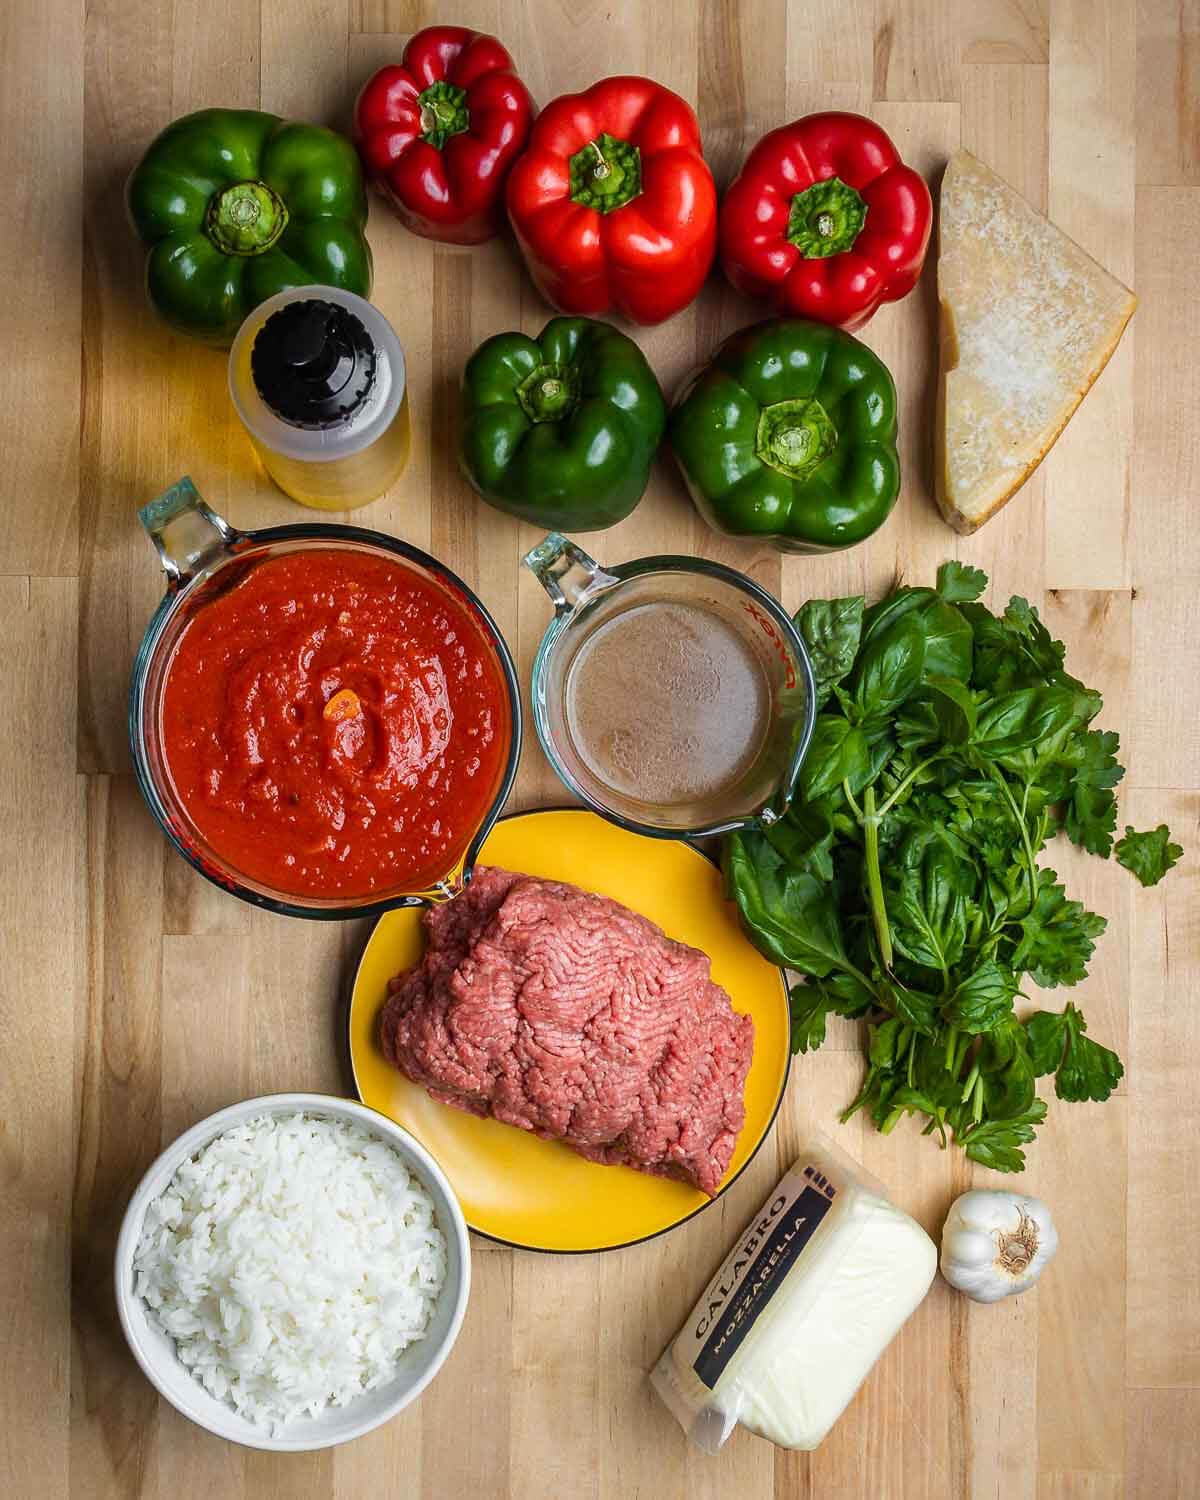 Ingredients shown: bell peppers, Pecorino, olive oil, marinara sauce, beef stock, parsley, basil, ground chuck, rice, mozzarella, and garlic.